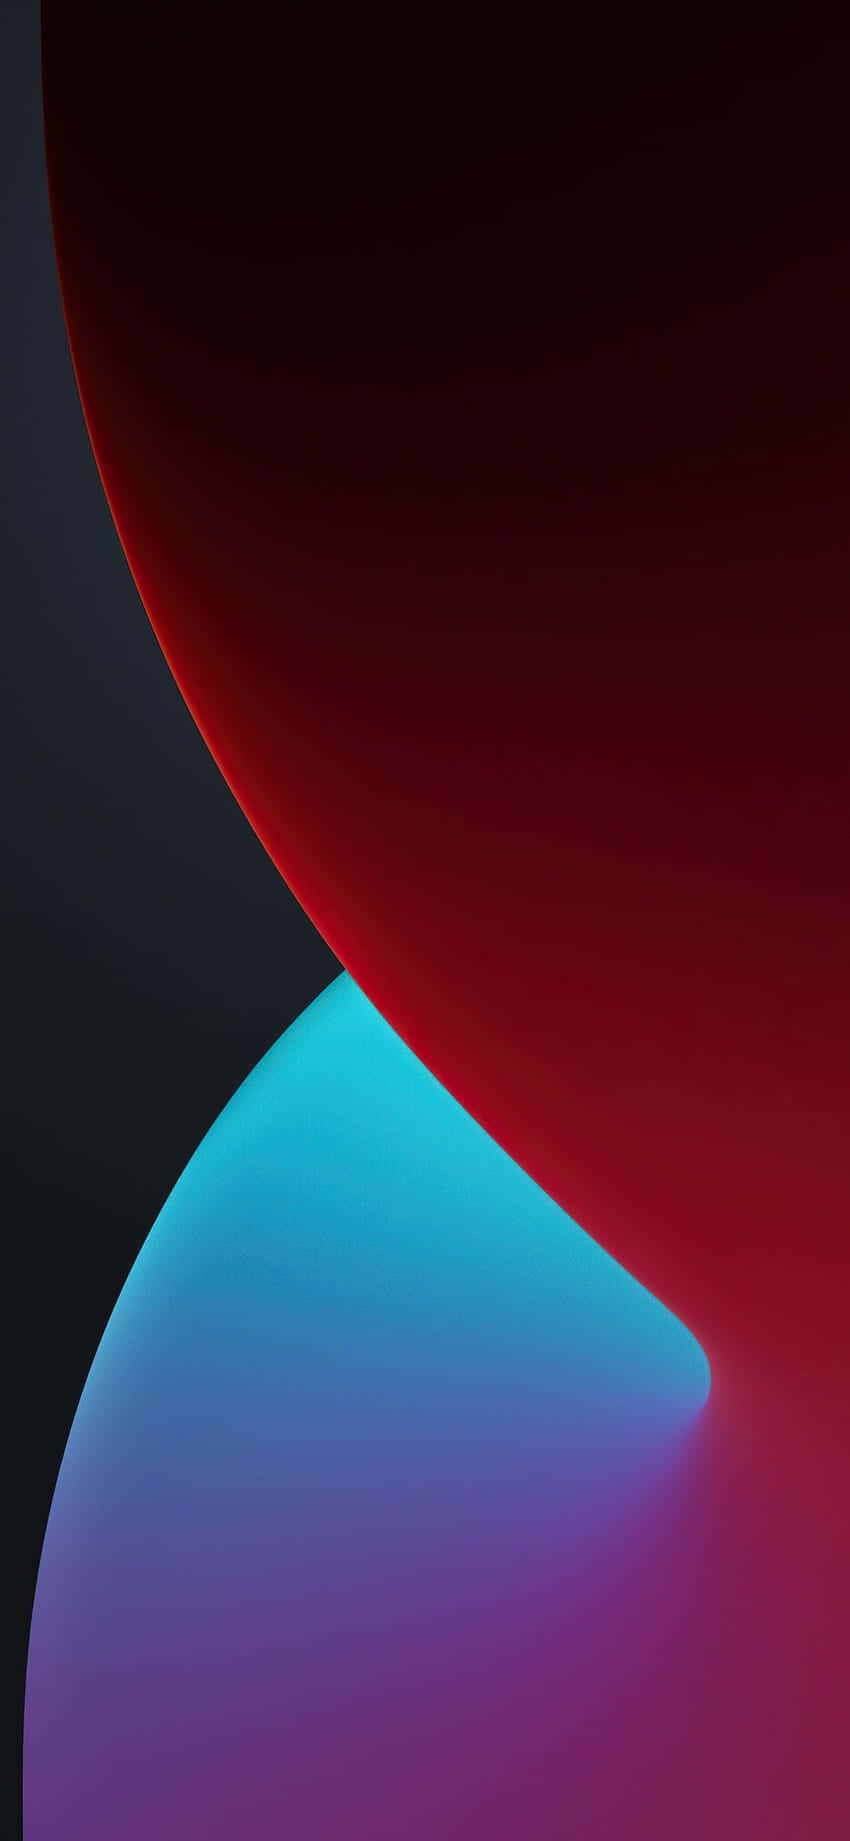 Applesflaggskepp Iphone 2020 - Det Ultimata Inom Smartphoneteknologi. Wallpaper